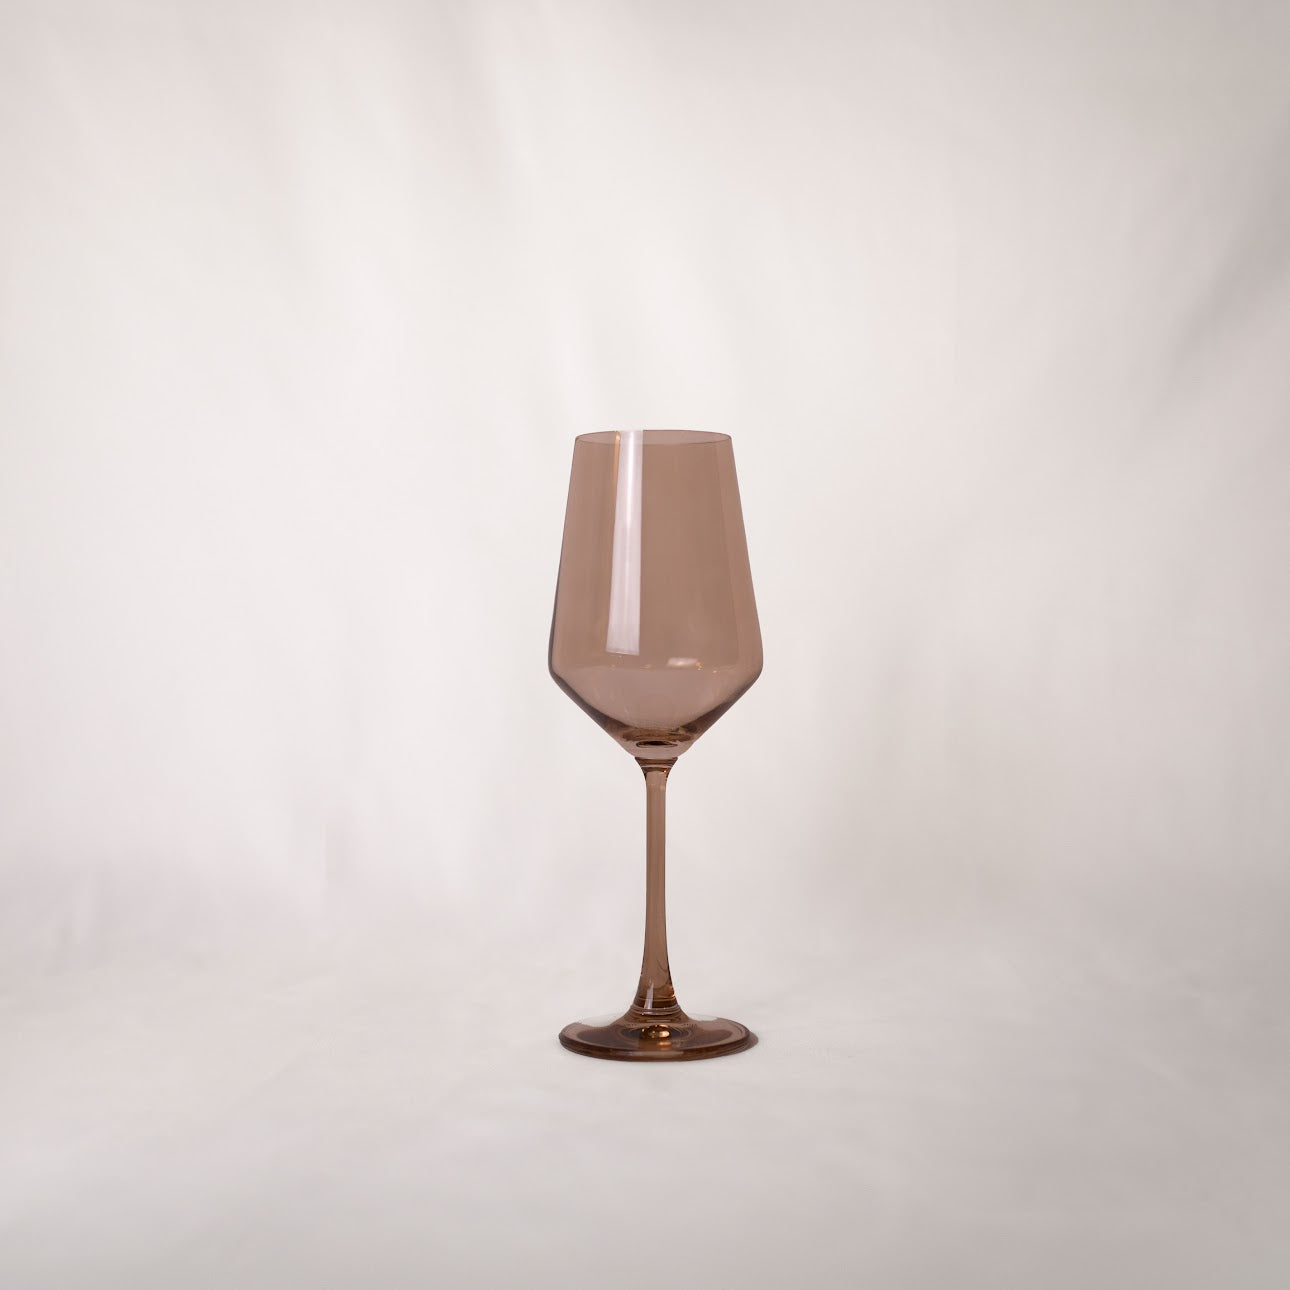 single brown colored wine glass